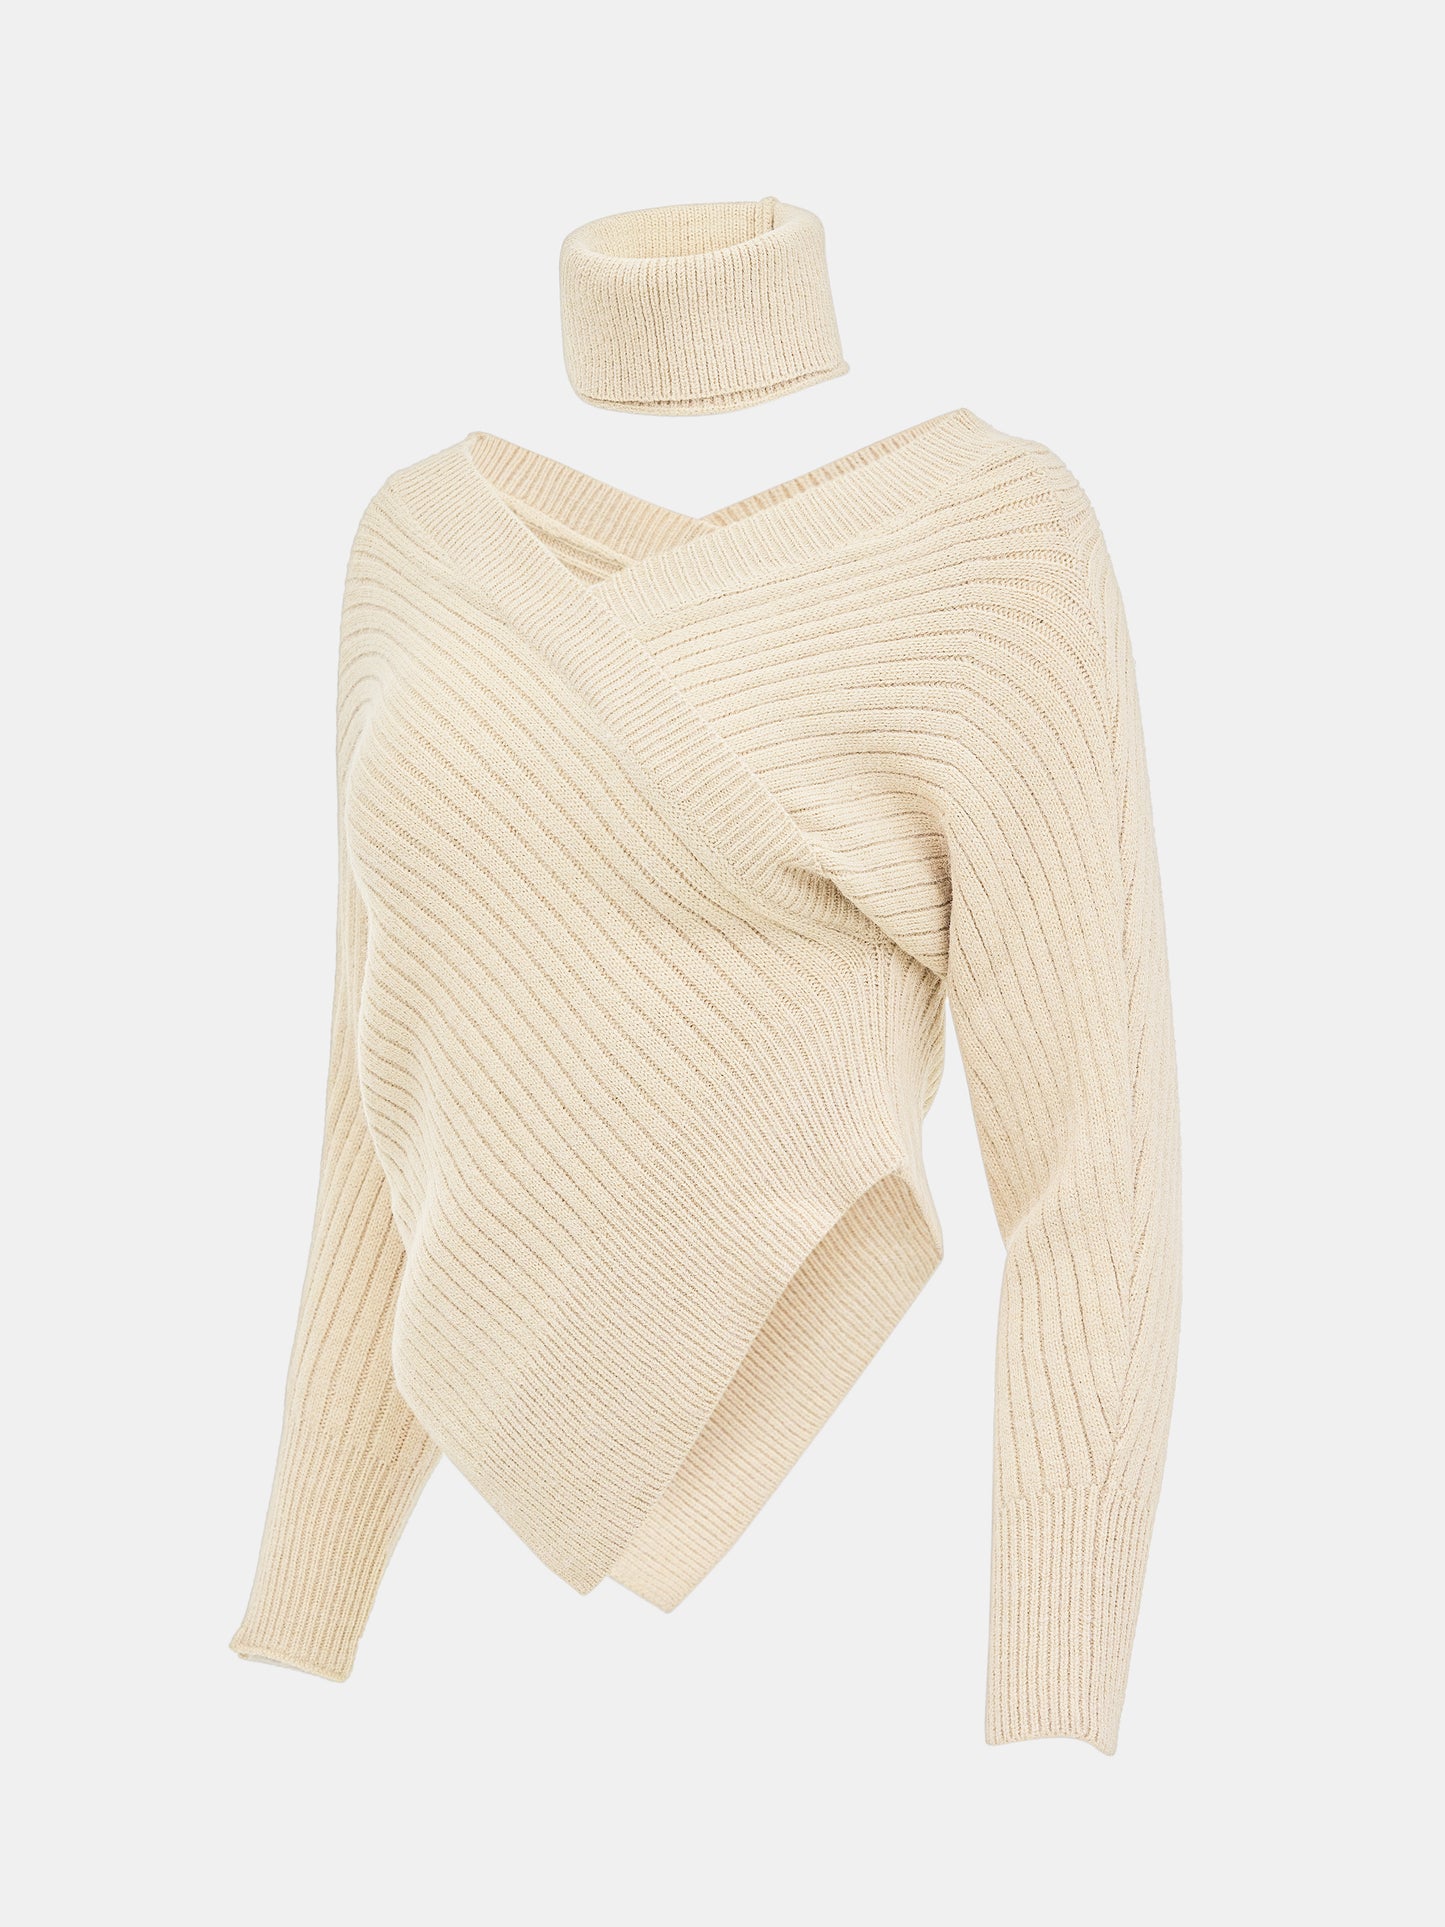 Asymmetric Neck Warmer Knit, Cream